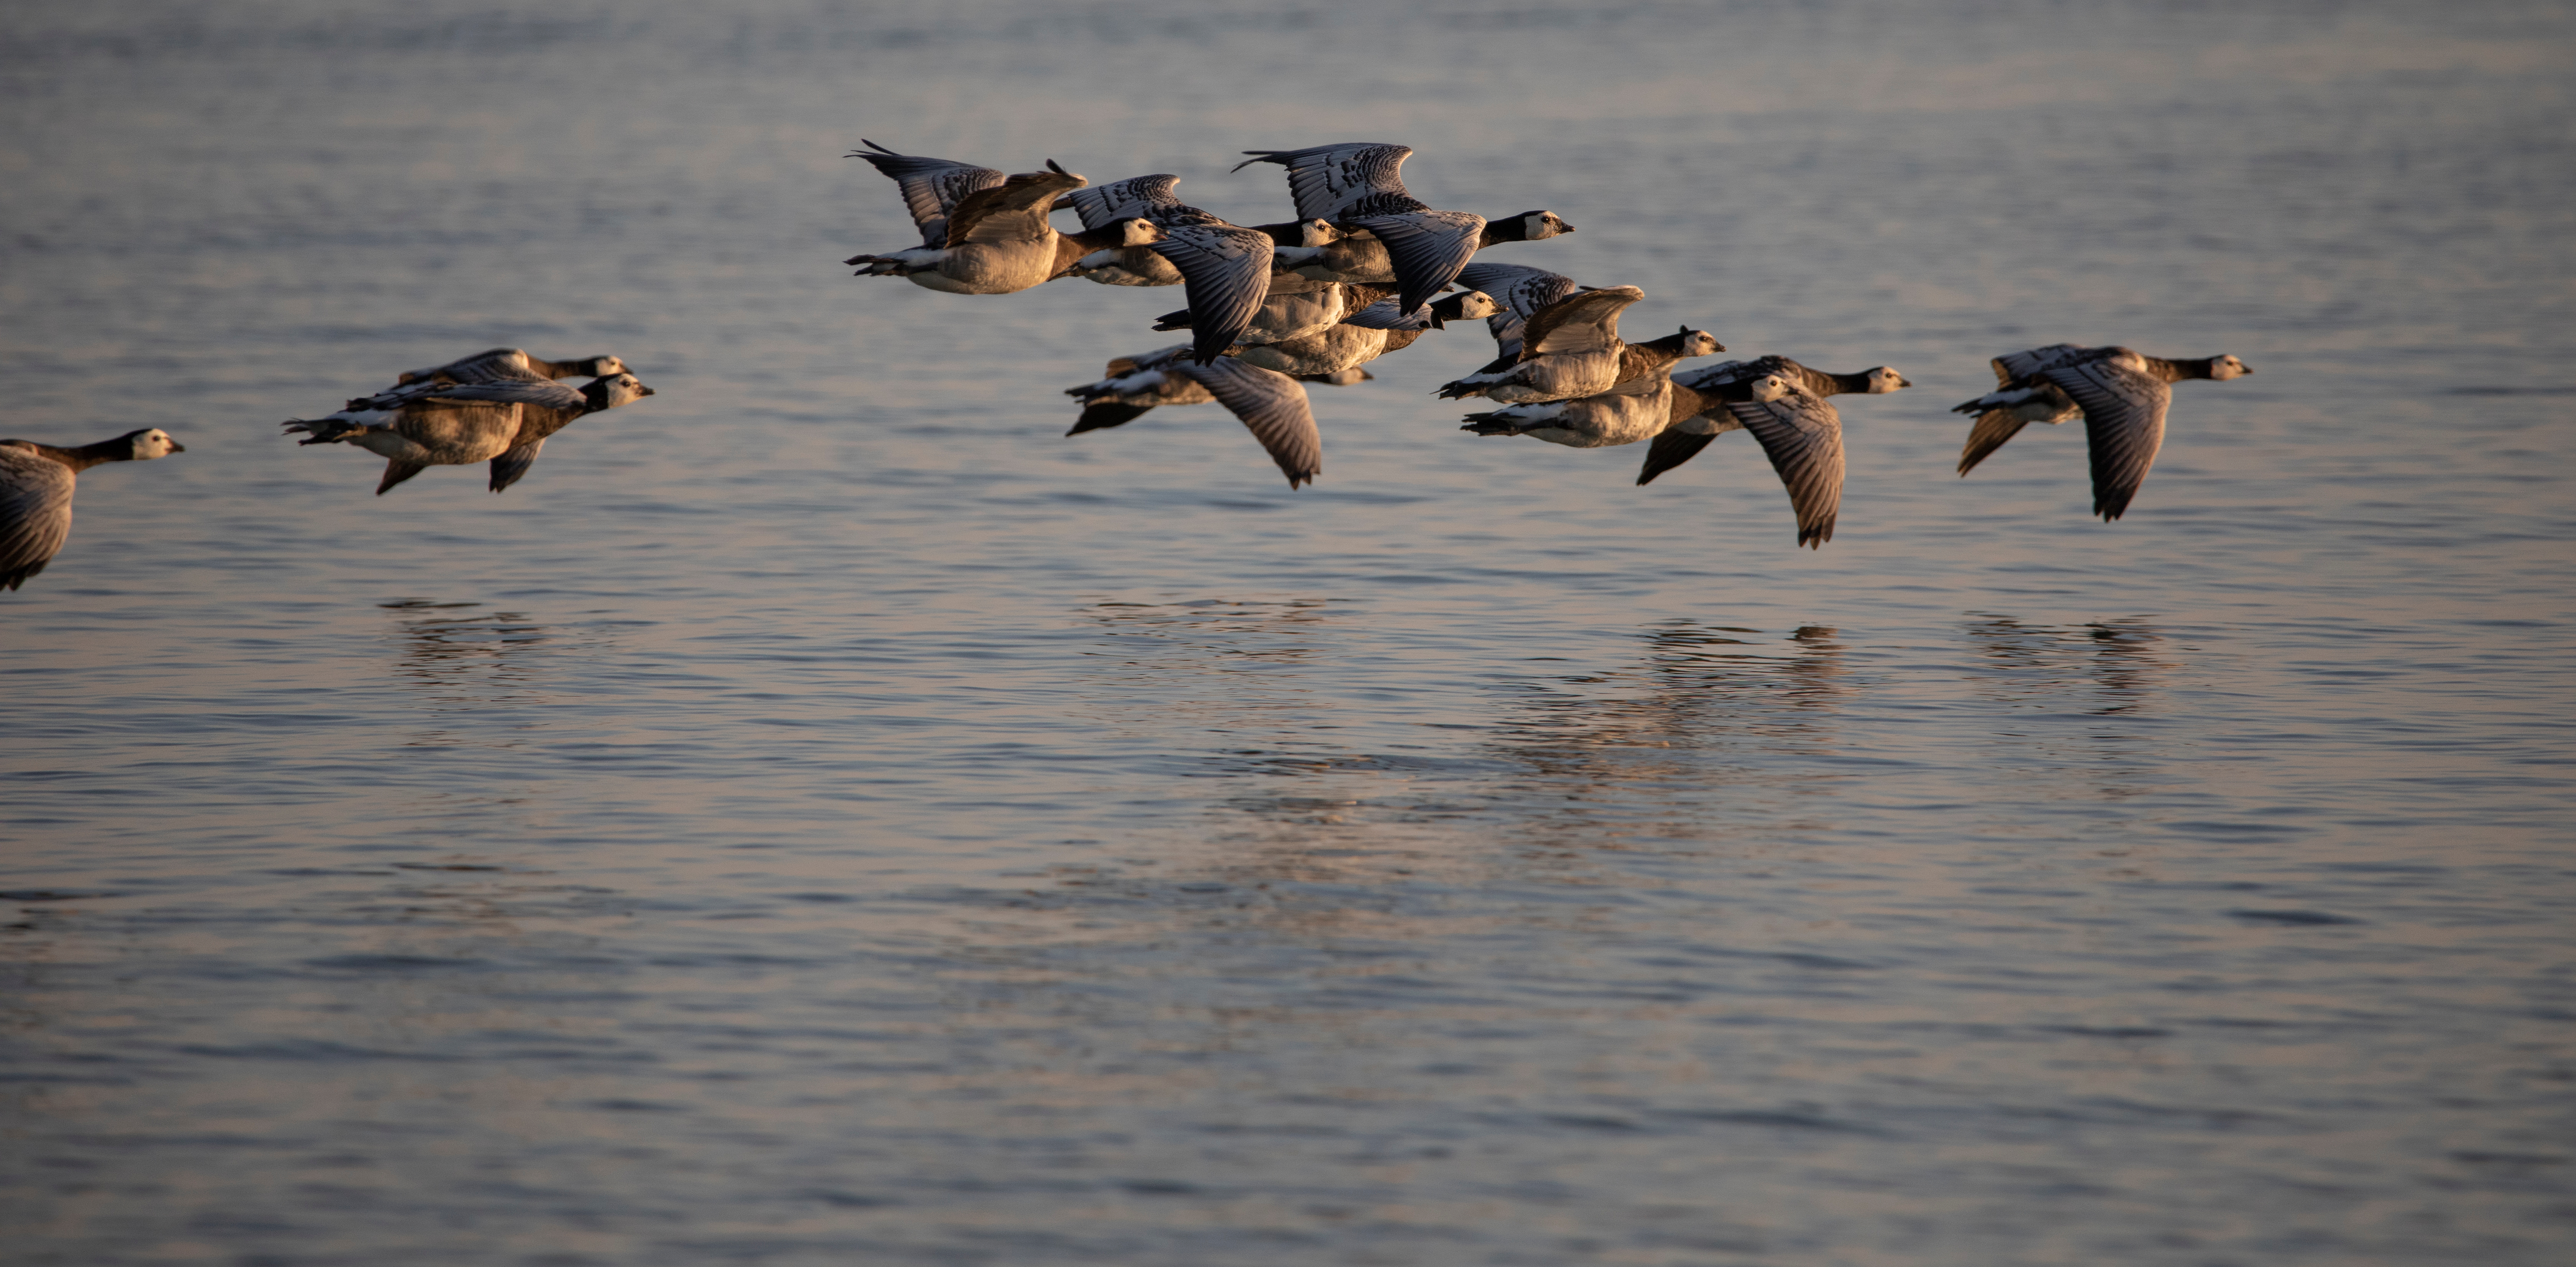 Geese in flight over water